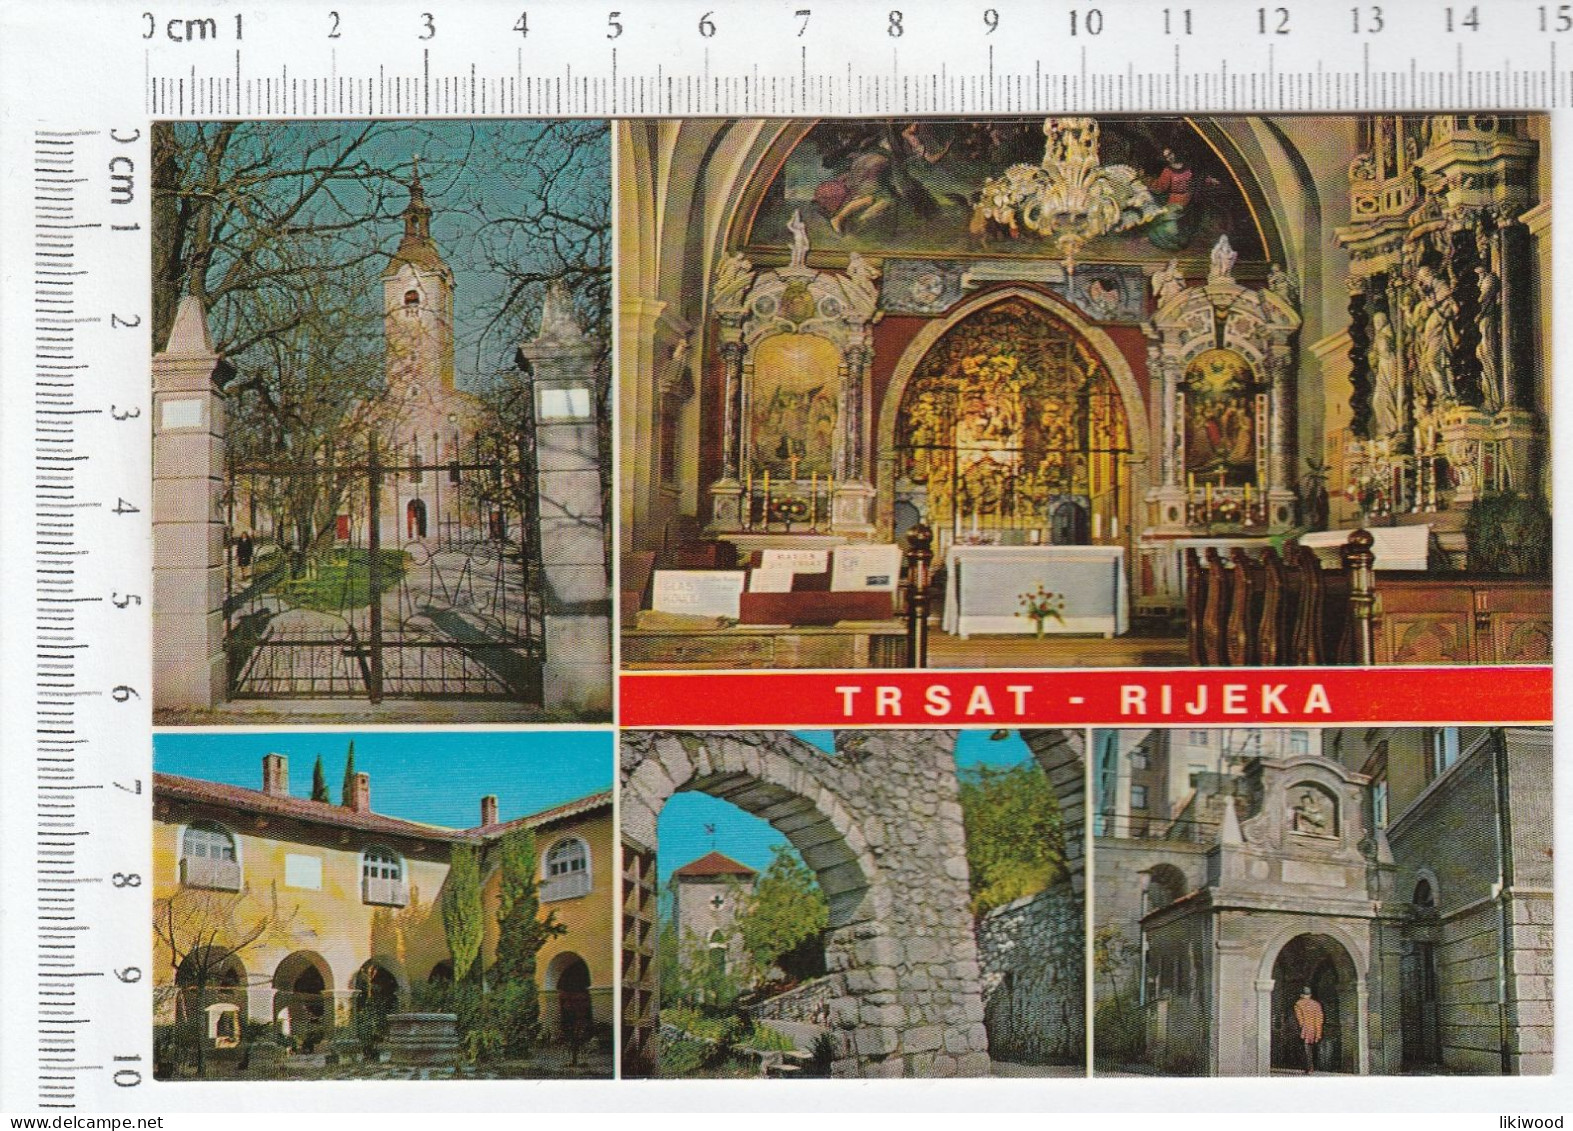 Trsat - Rijeka - Croatia